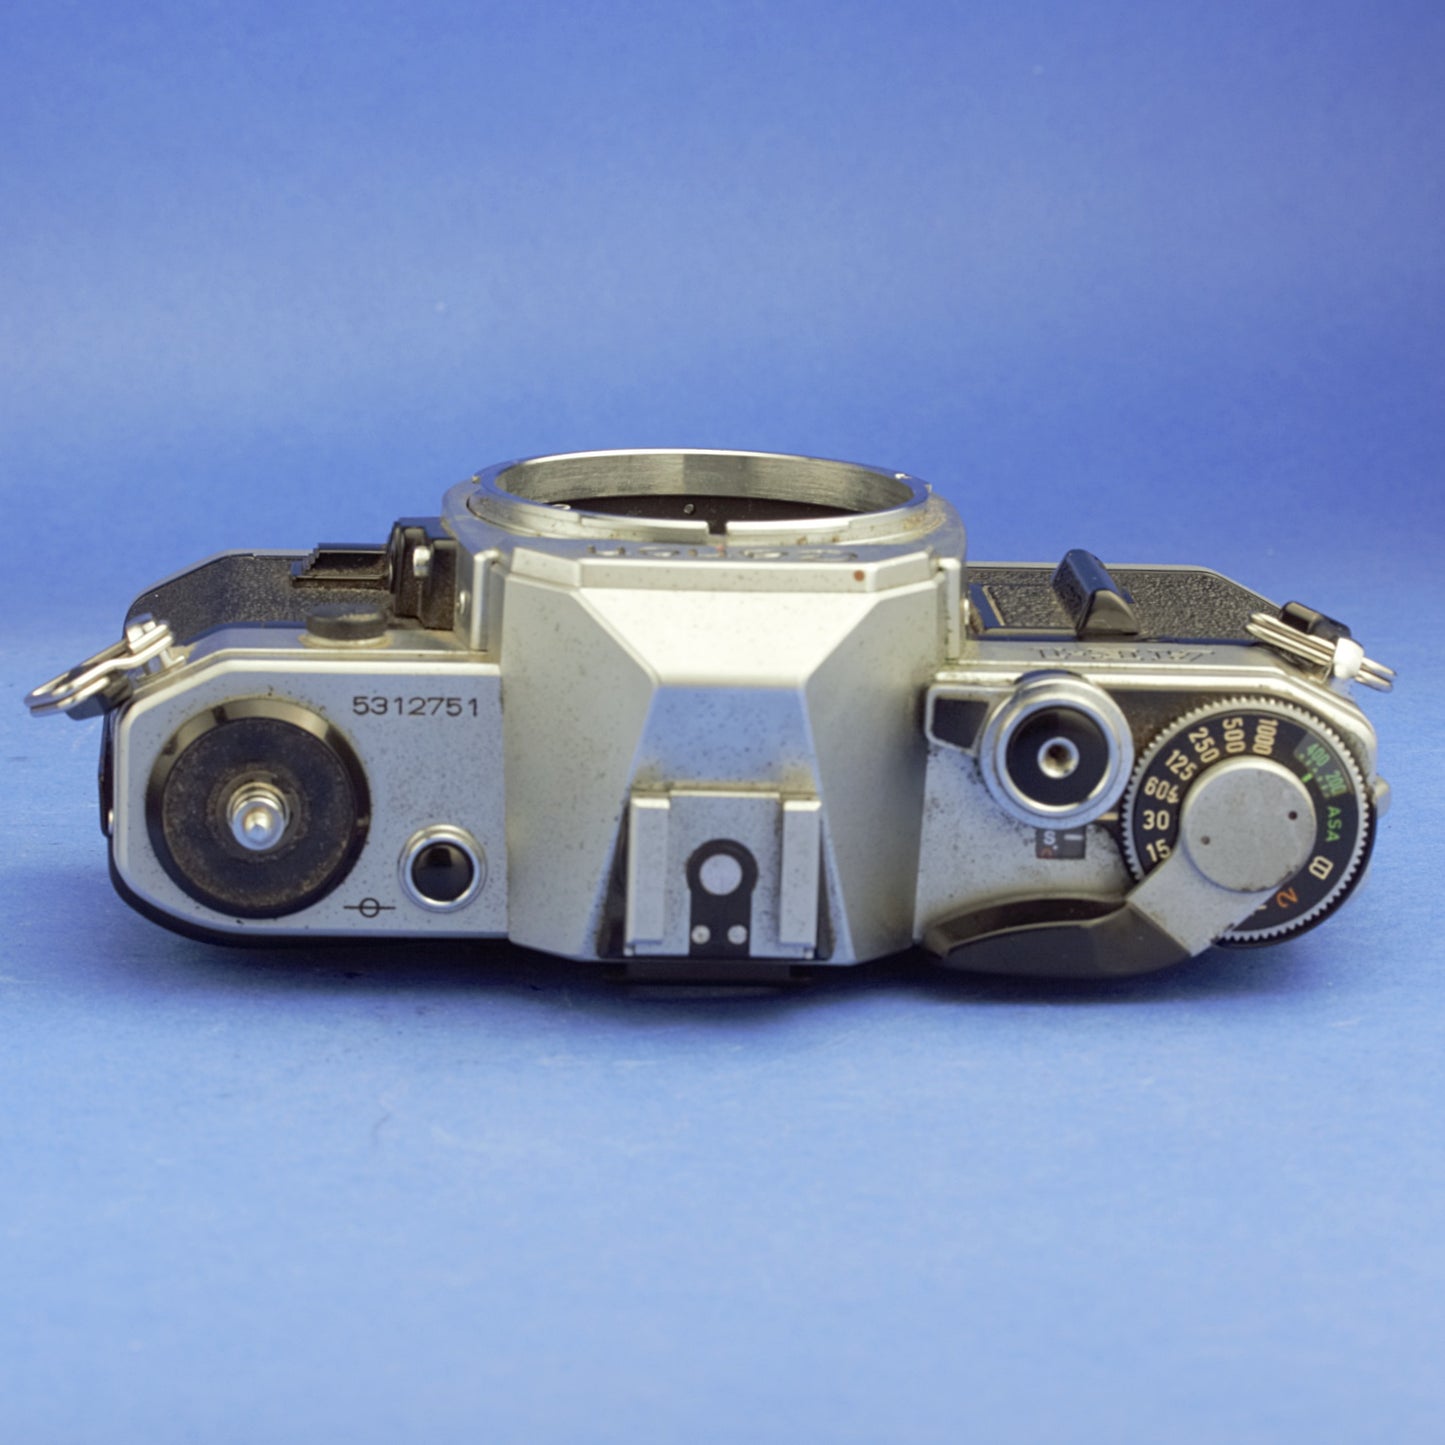 Canon AE-1 Film Camera Body Not Working